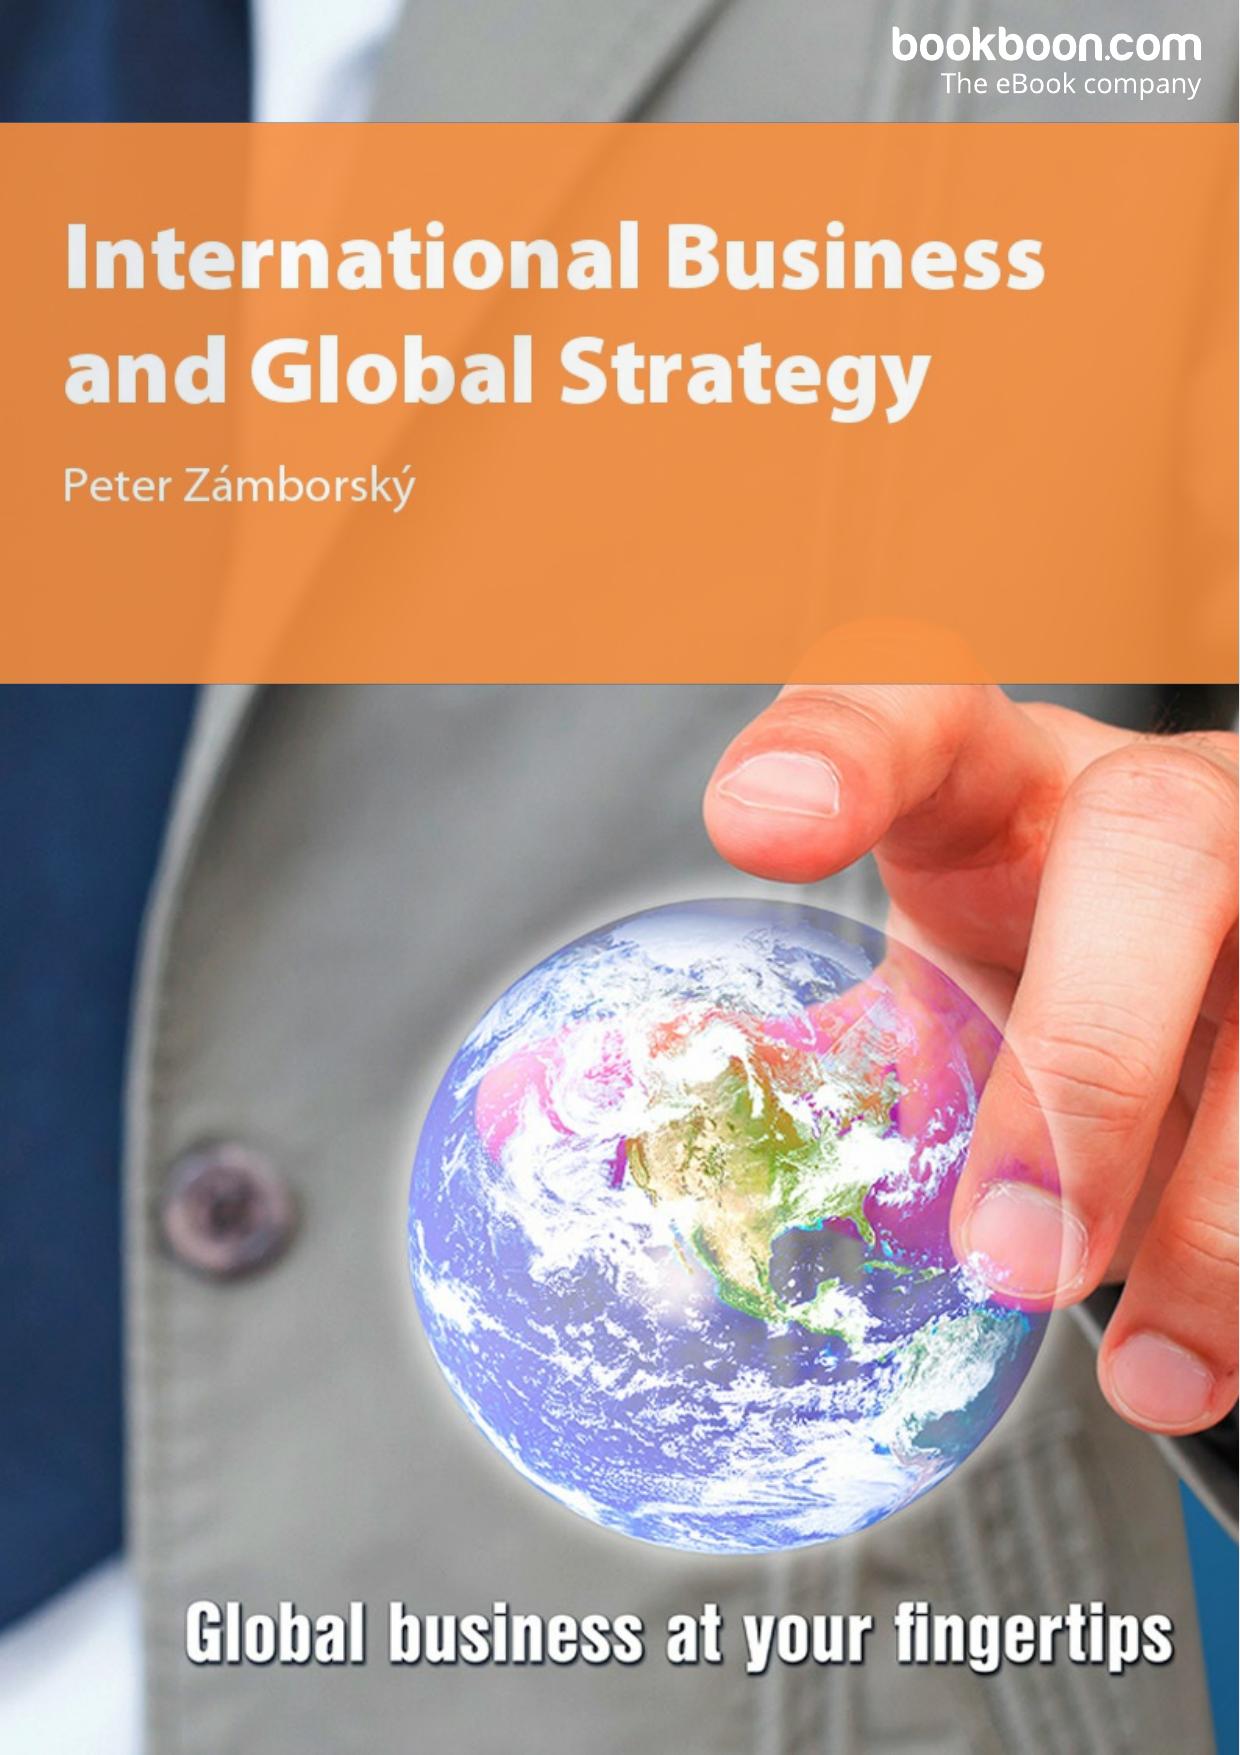 International Business and Global Strategy ( PDFDrive ) 2016